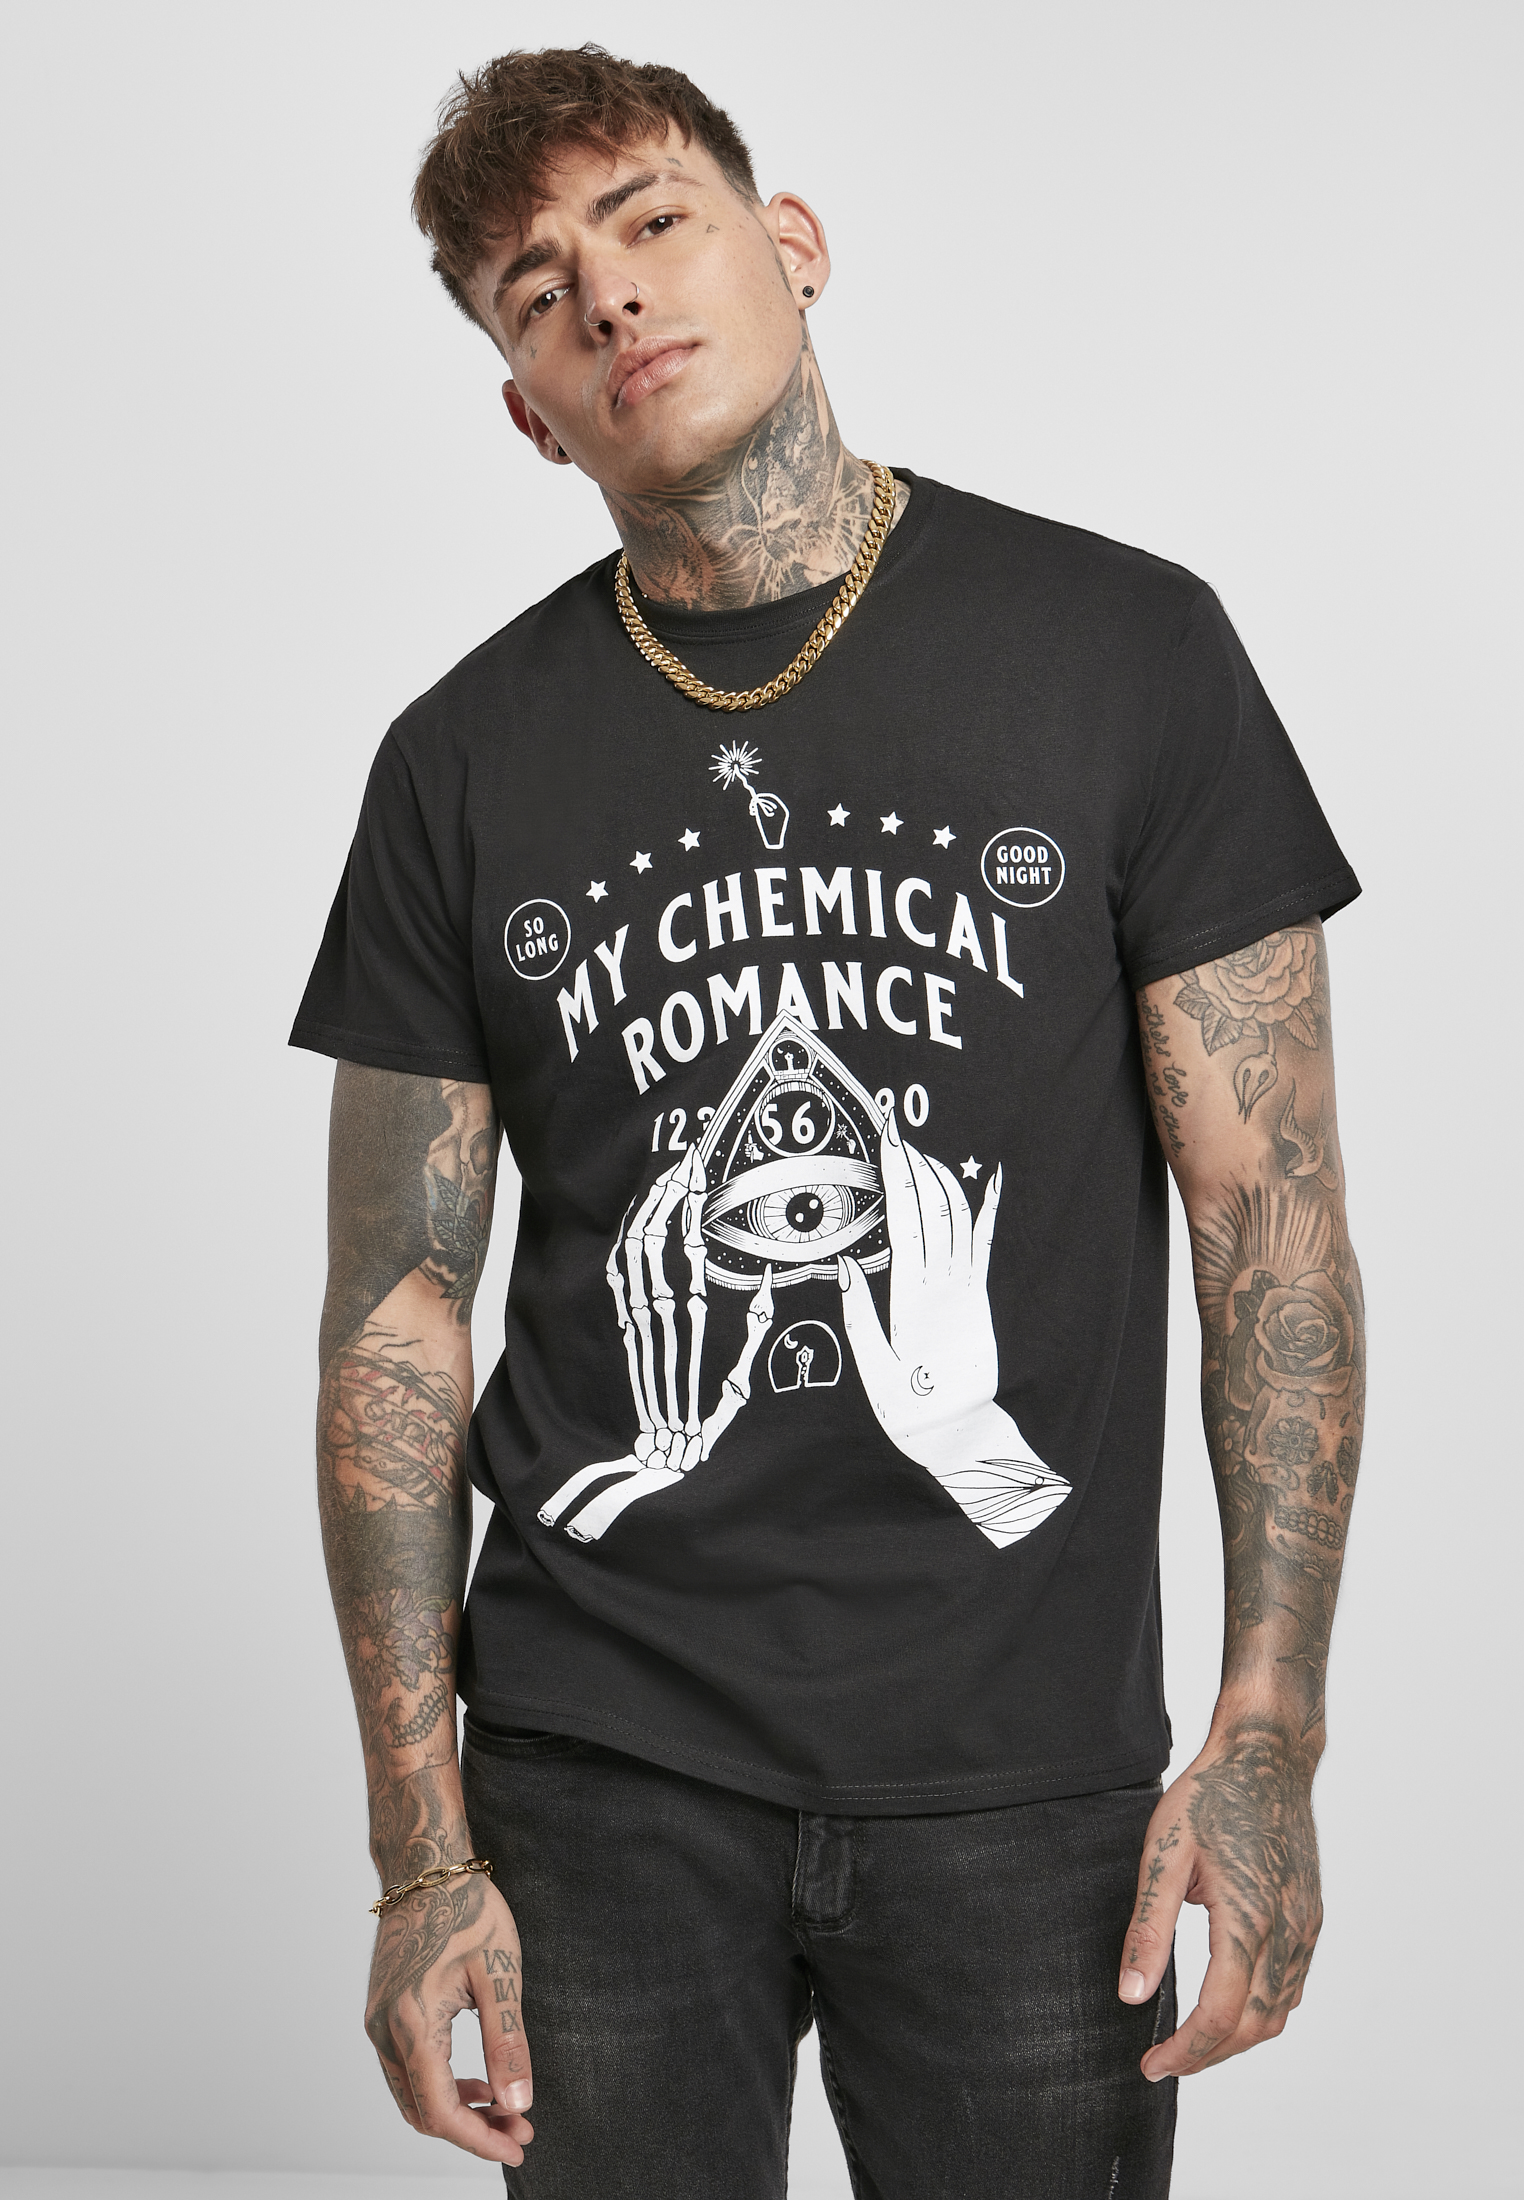 My Chemical Romance T-Shirts & Merch